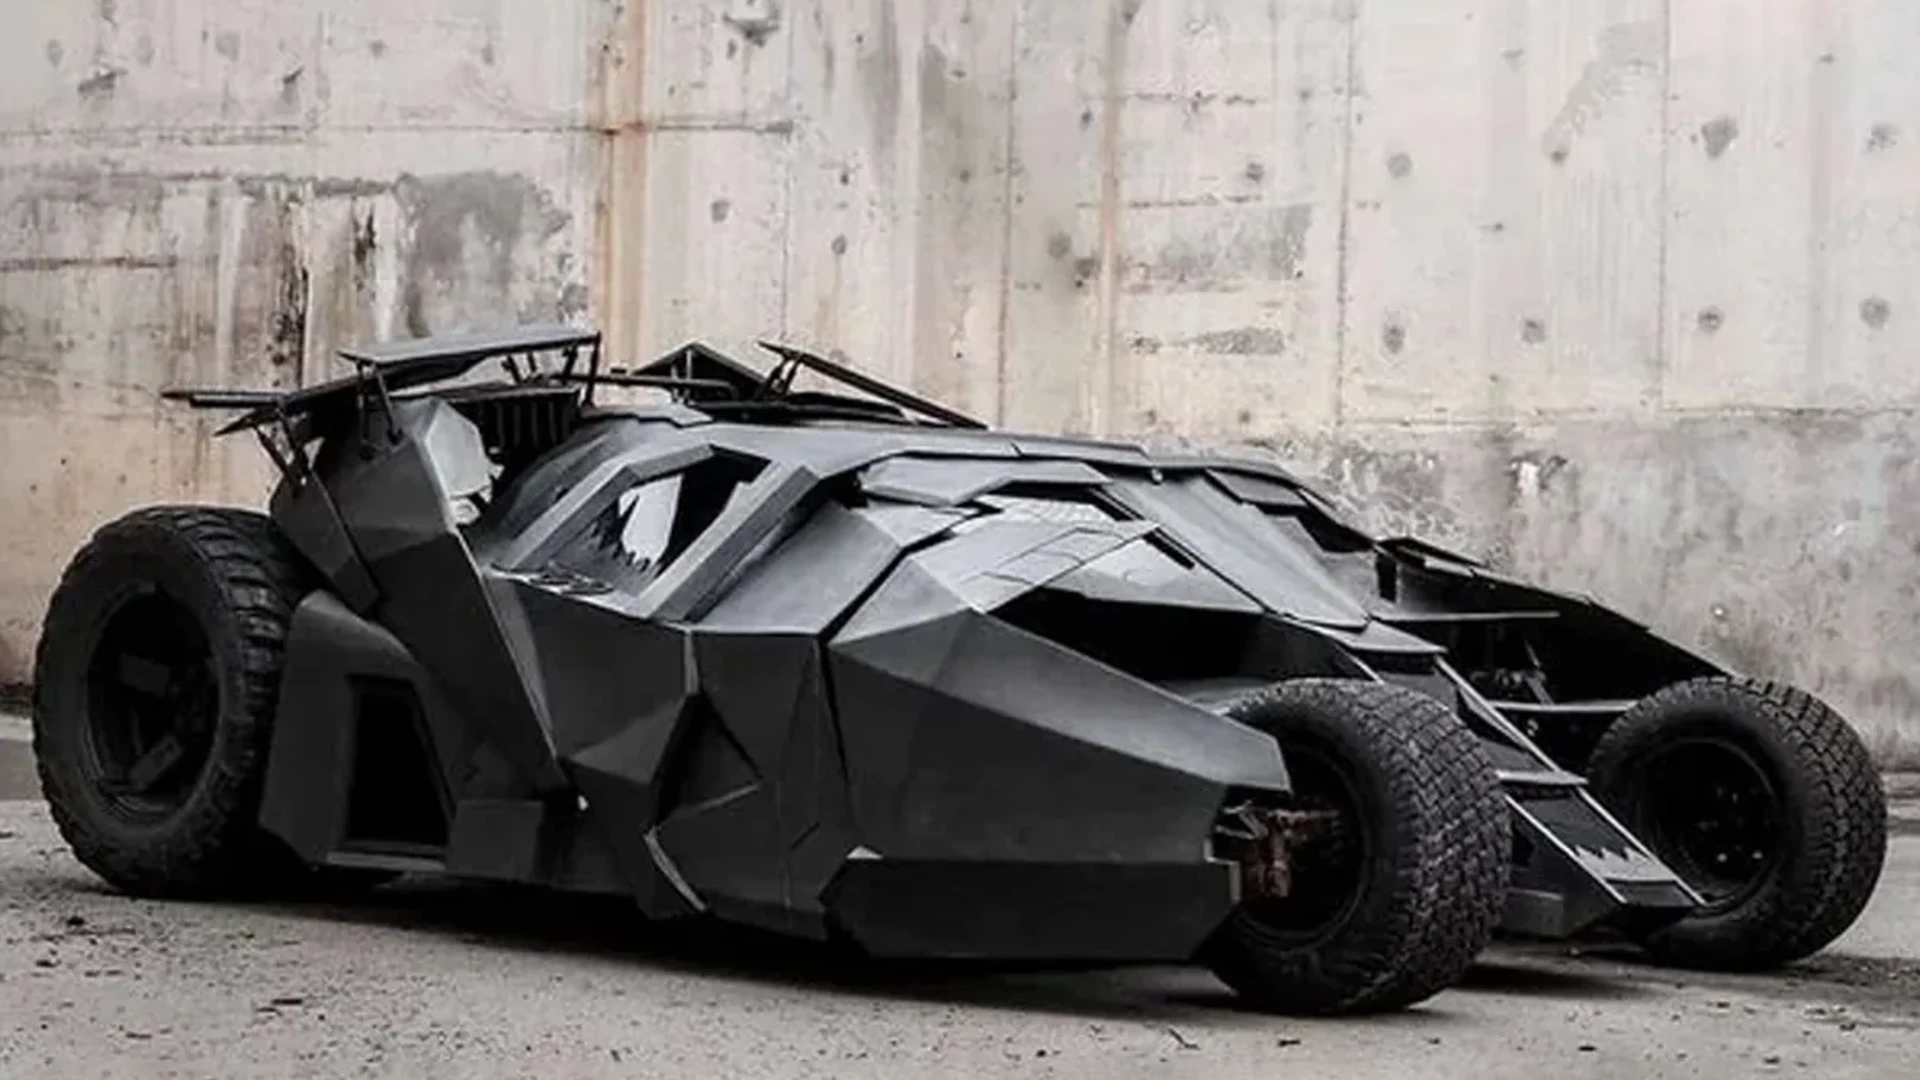 Bruce Wayne’s Batmobile Tumbler goes green, Here’s the electric-powered version